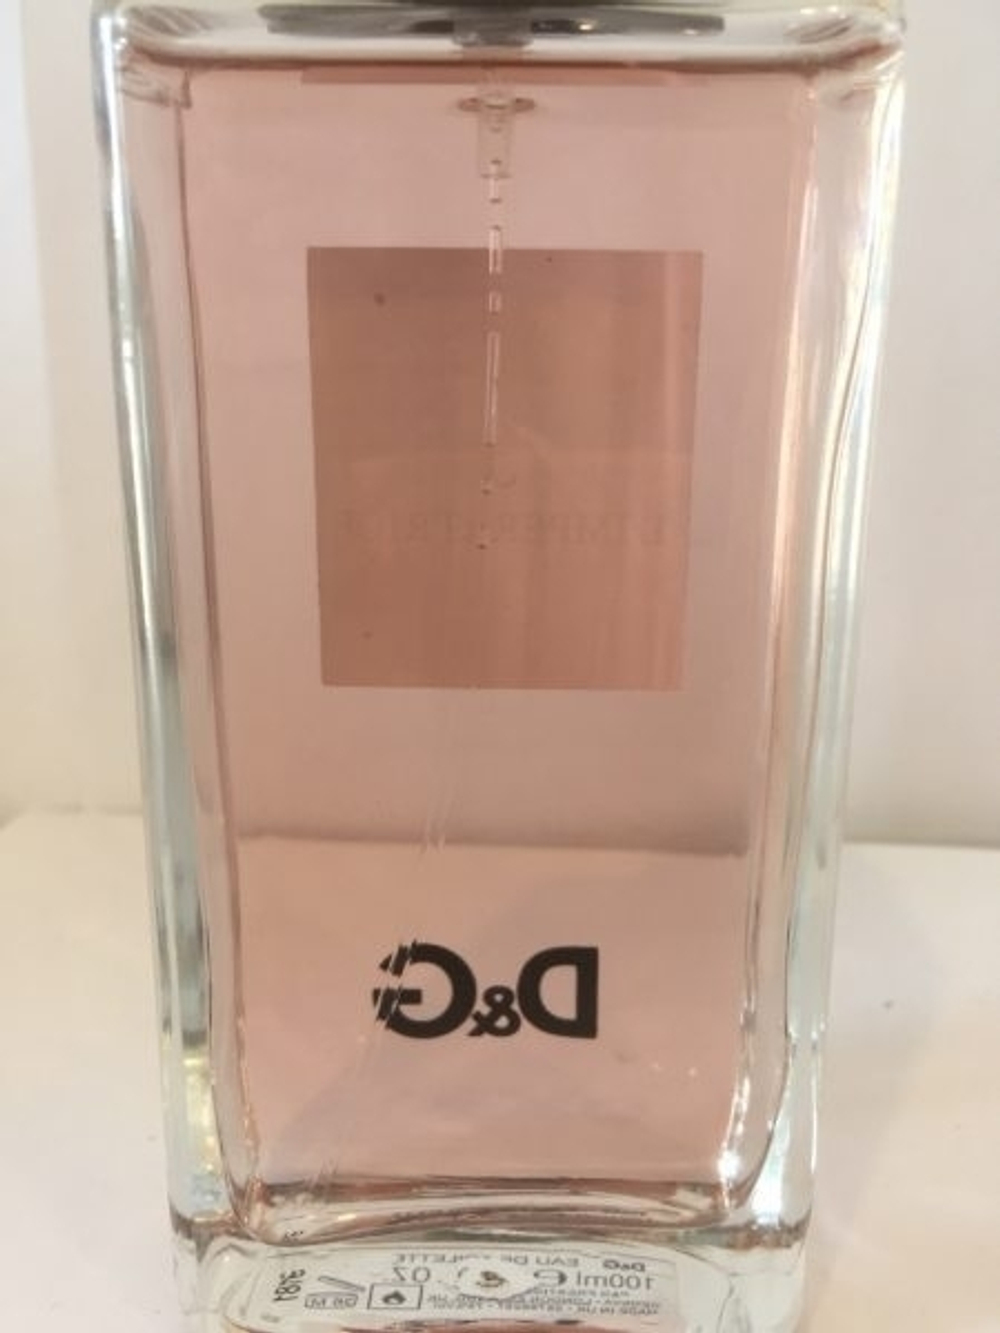 Тестер парфюмерии Dolce&Gabbana DG 3 L Imperatrice  EDT 100 ml TESTER (duty free парфюмерия) (тестер)